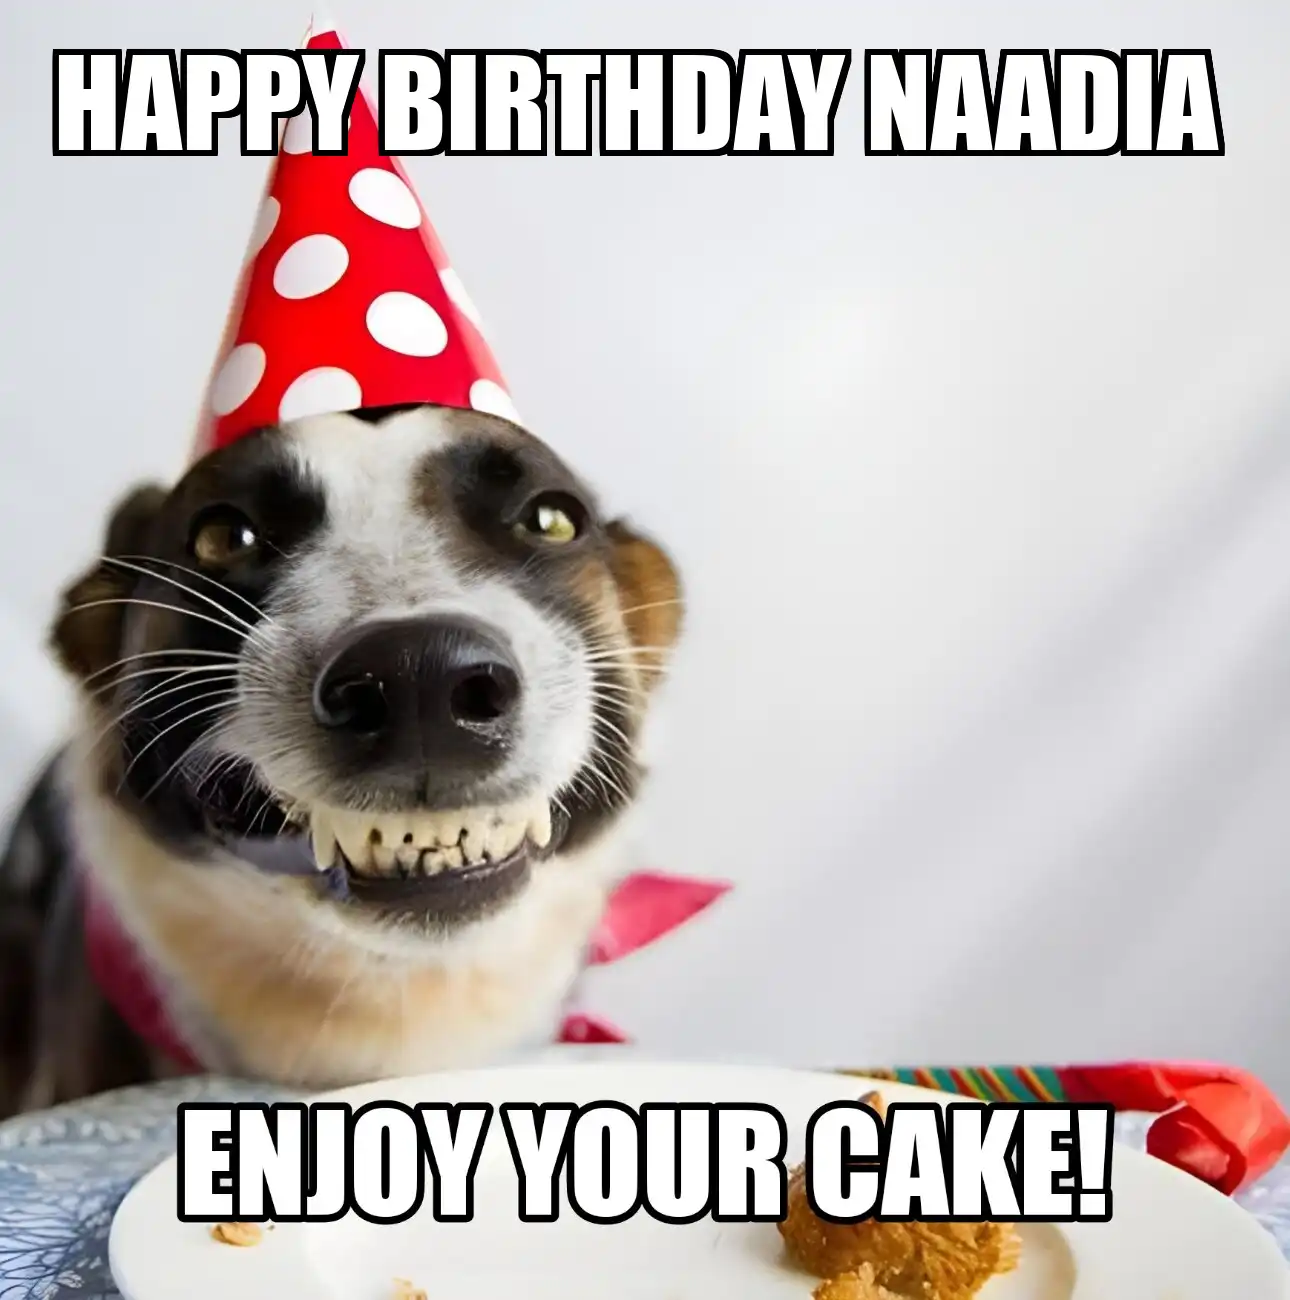 Happy Birthday Naadia Enjoy Your Cake Dog Meme